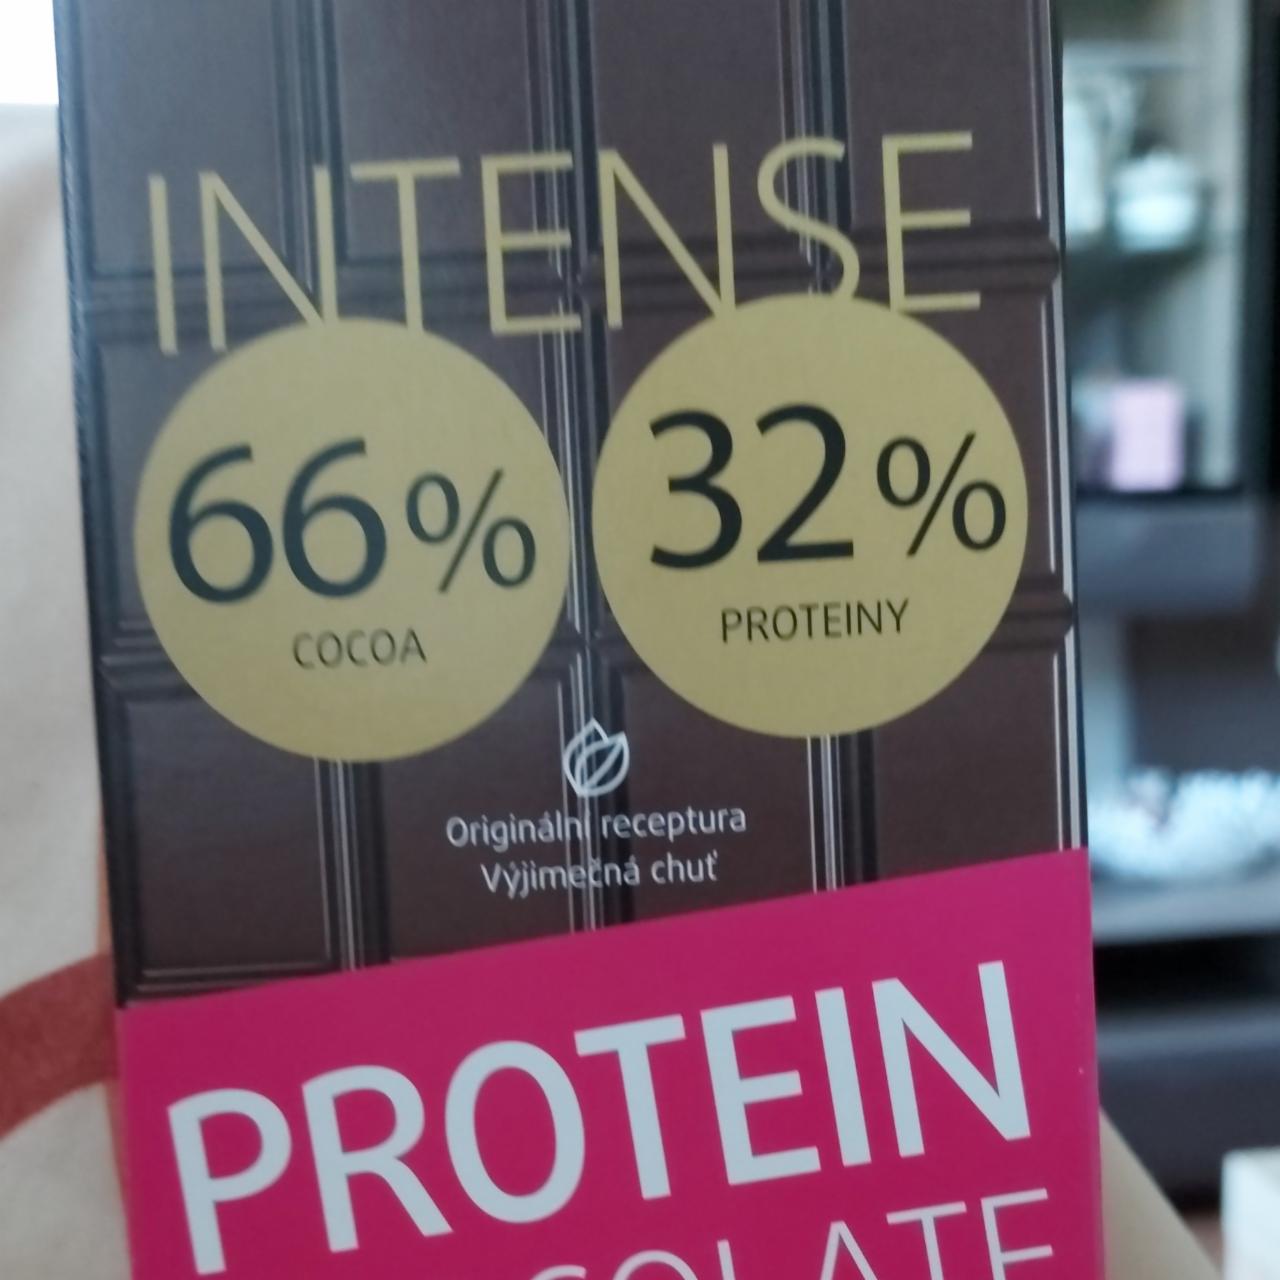 Fotografie - intense protein chocolade KetoFit